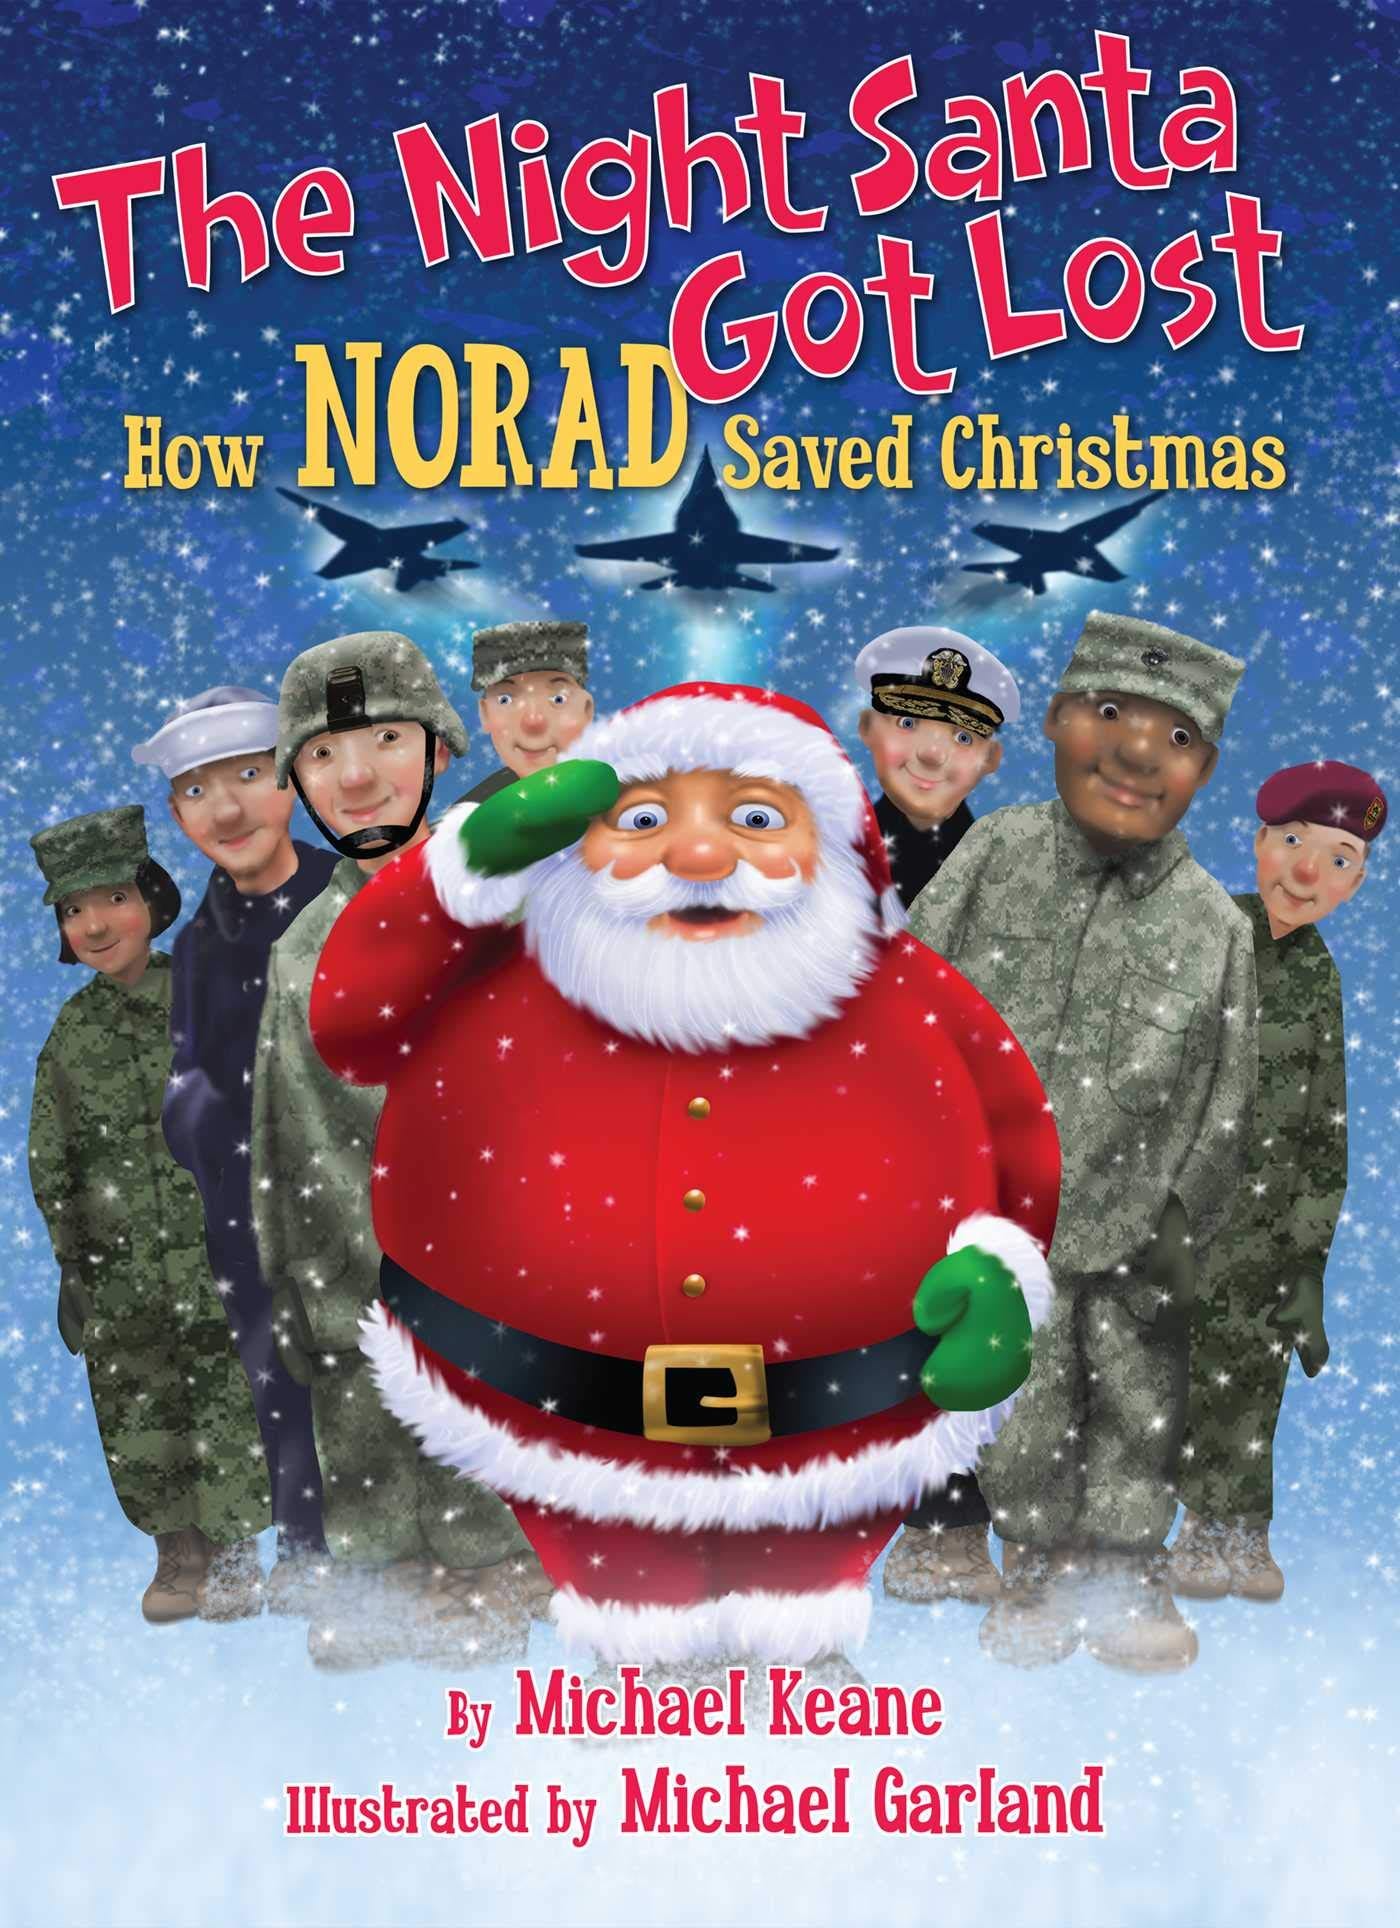 Amazon.com: The Night Santa Got Lost: How NORAD Saved Christmas:  9781621573982: Keane, Michael, Garland, Michael: Books